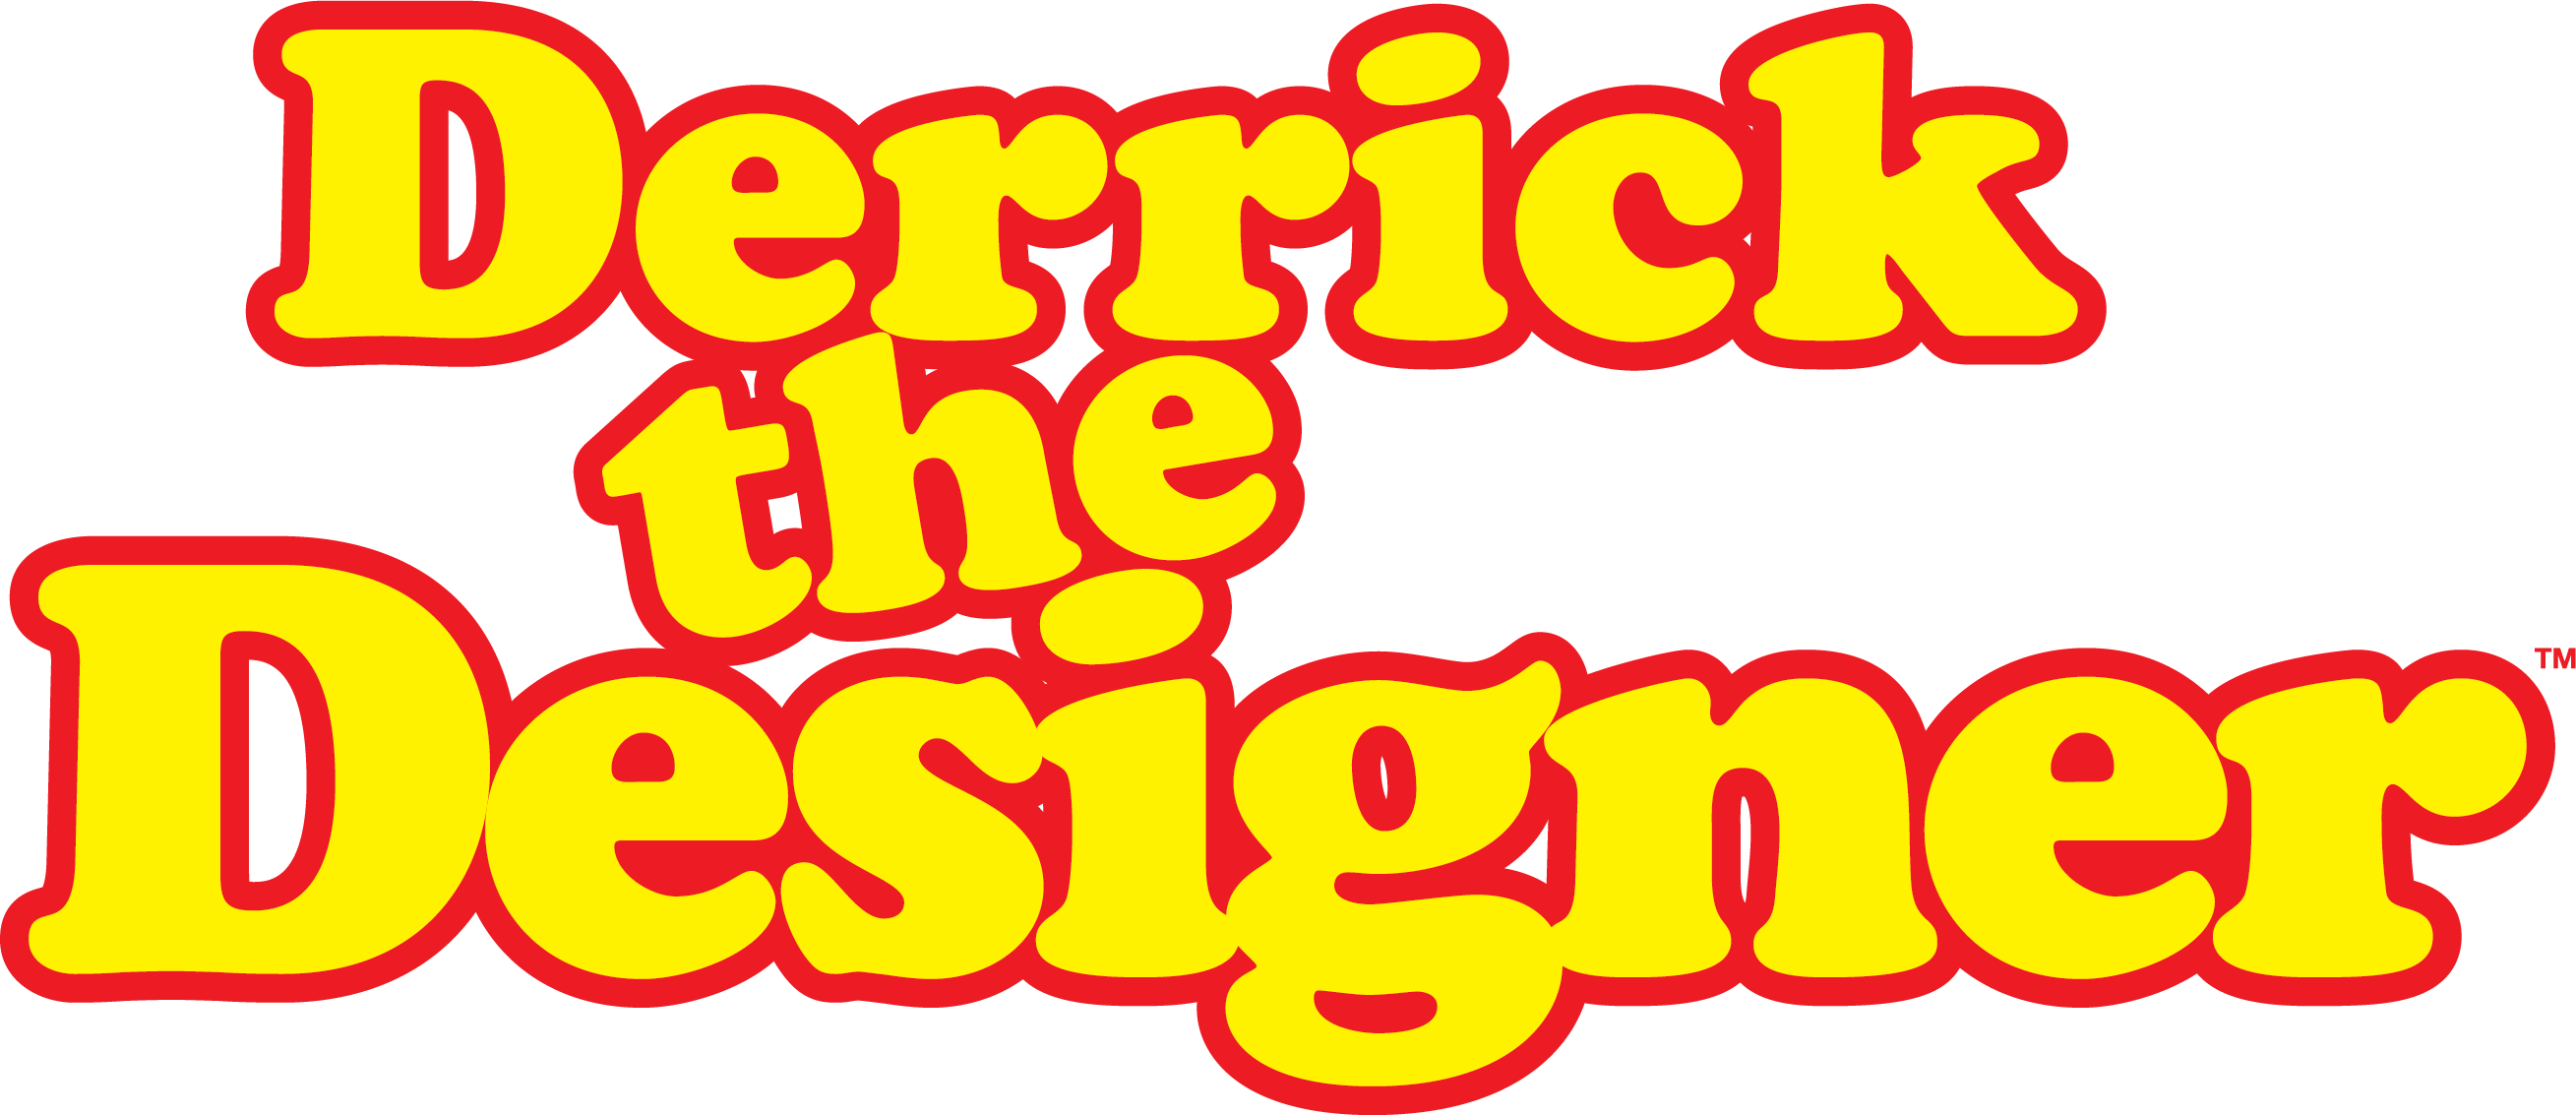 Derrick The Designer